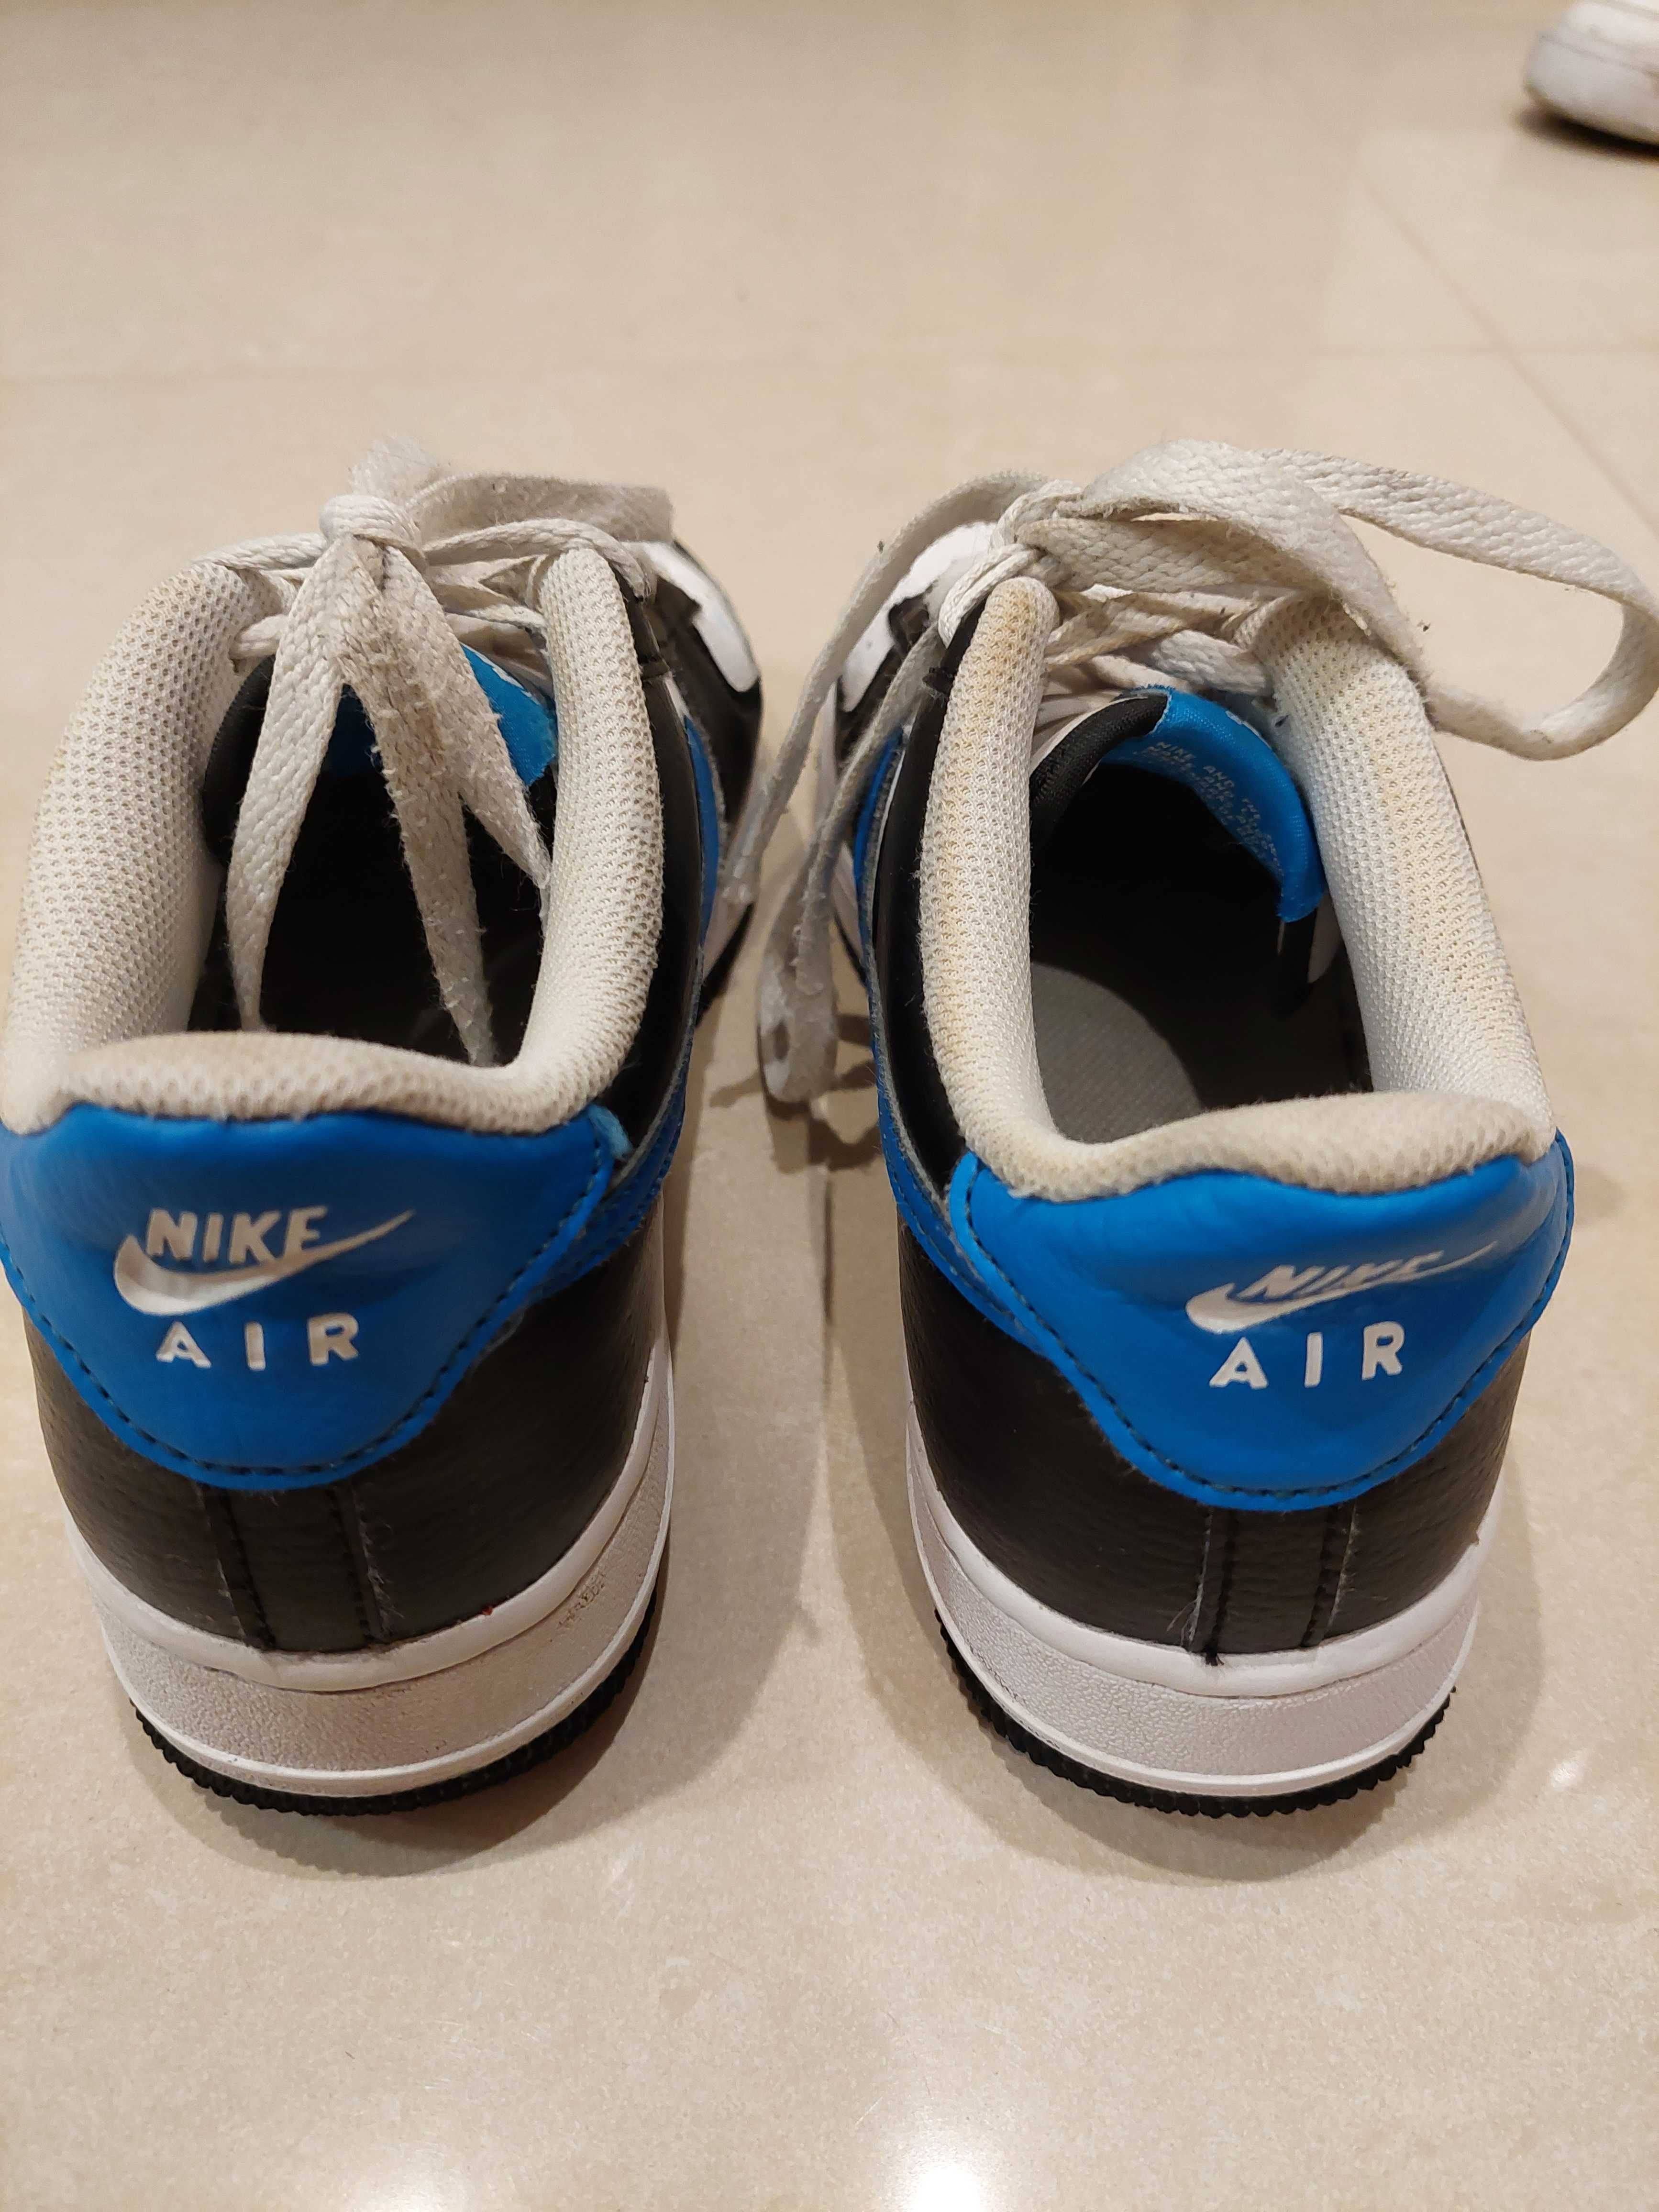 Nike air force azul e branco